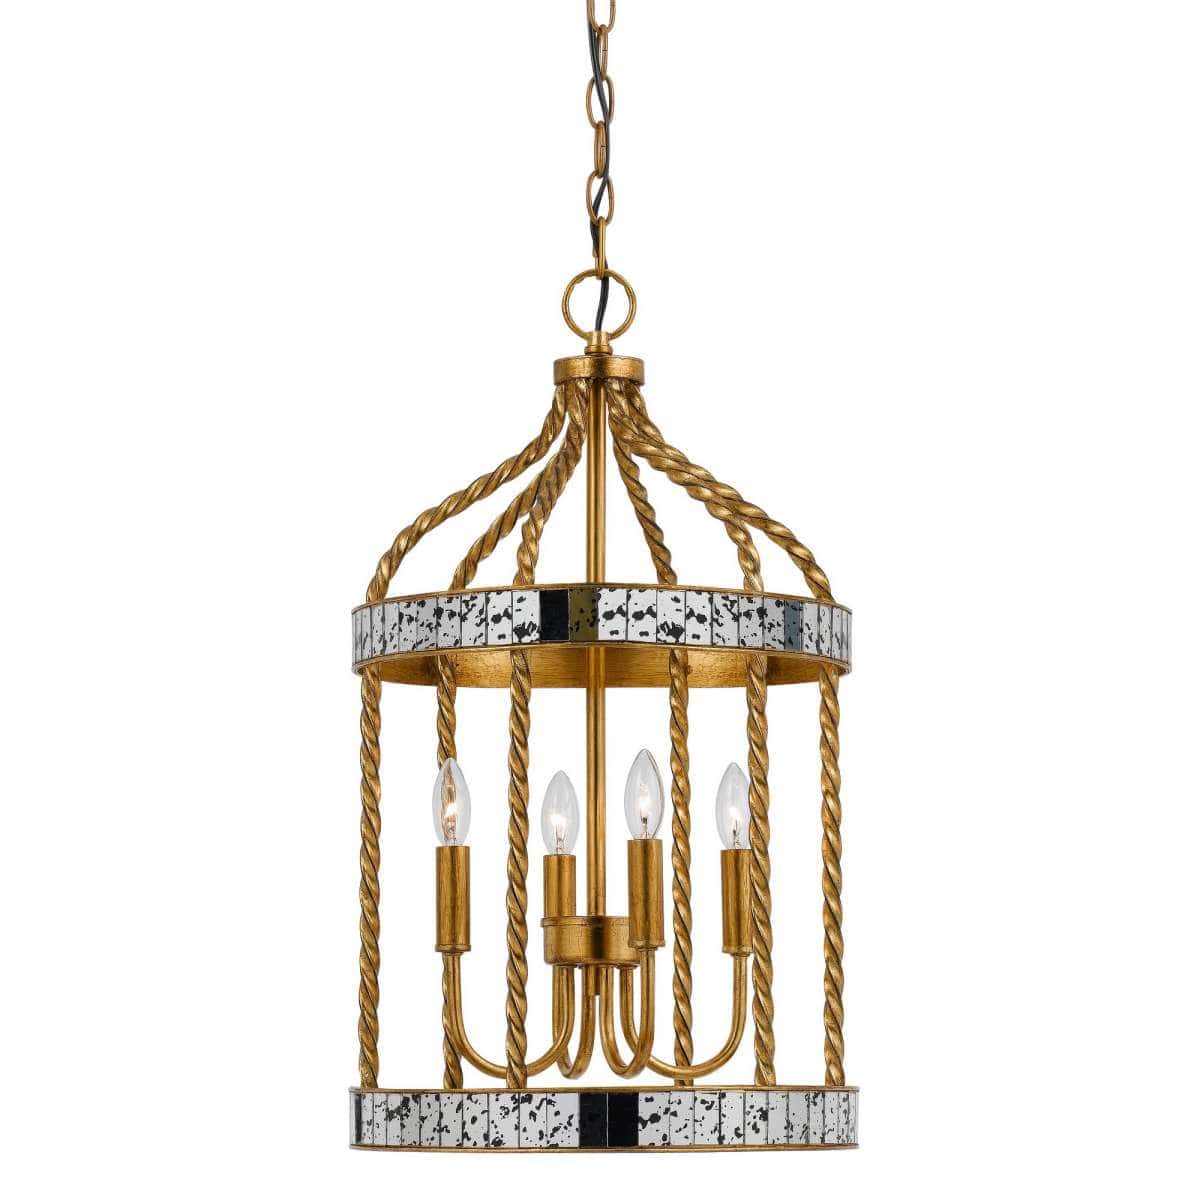 Benzara Metal Bird Cage Design Pendant With Woven Rope Pattern, Gold By Benzara Chandeliers BM224983